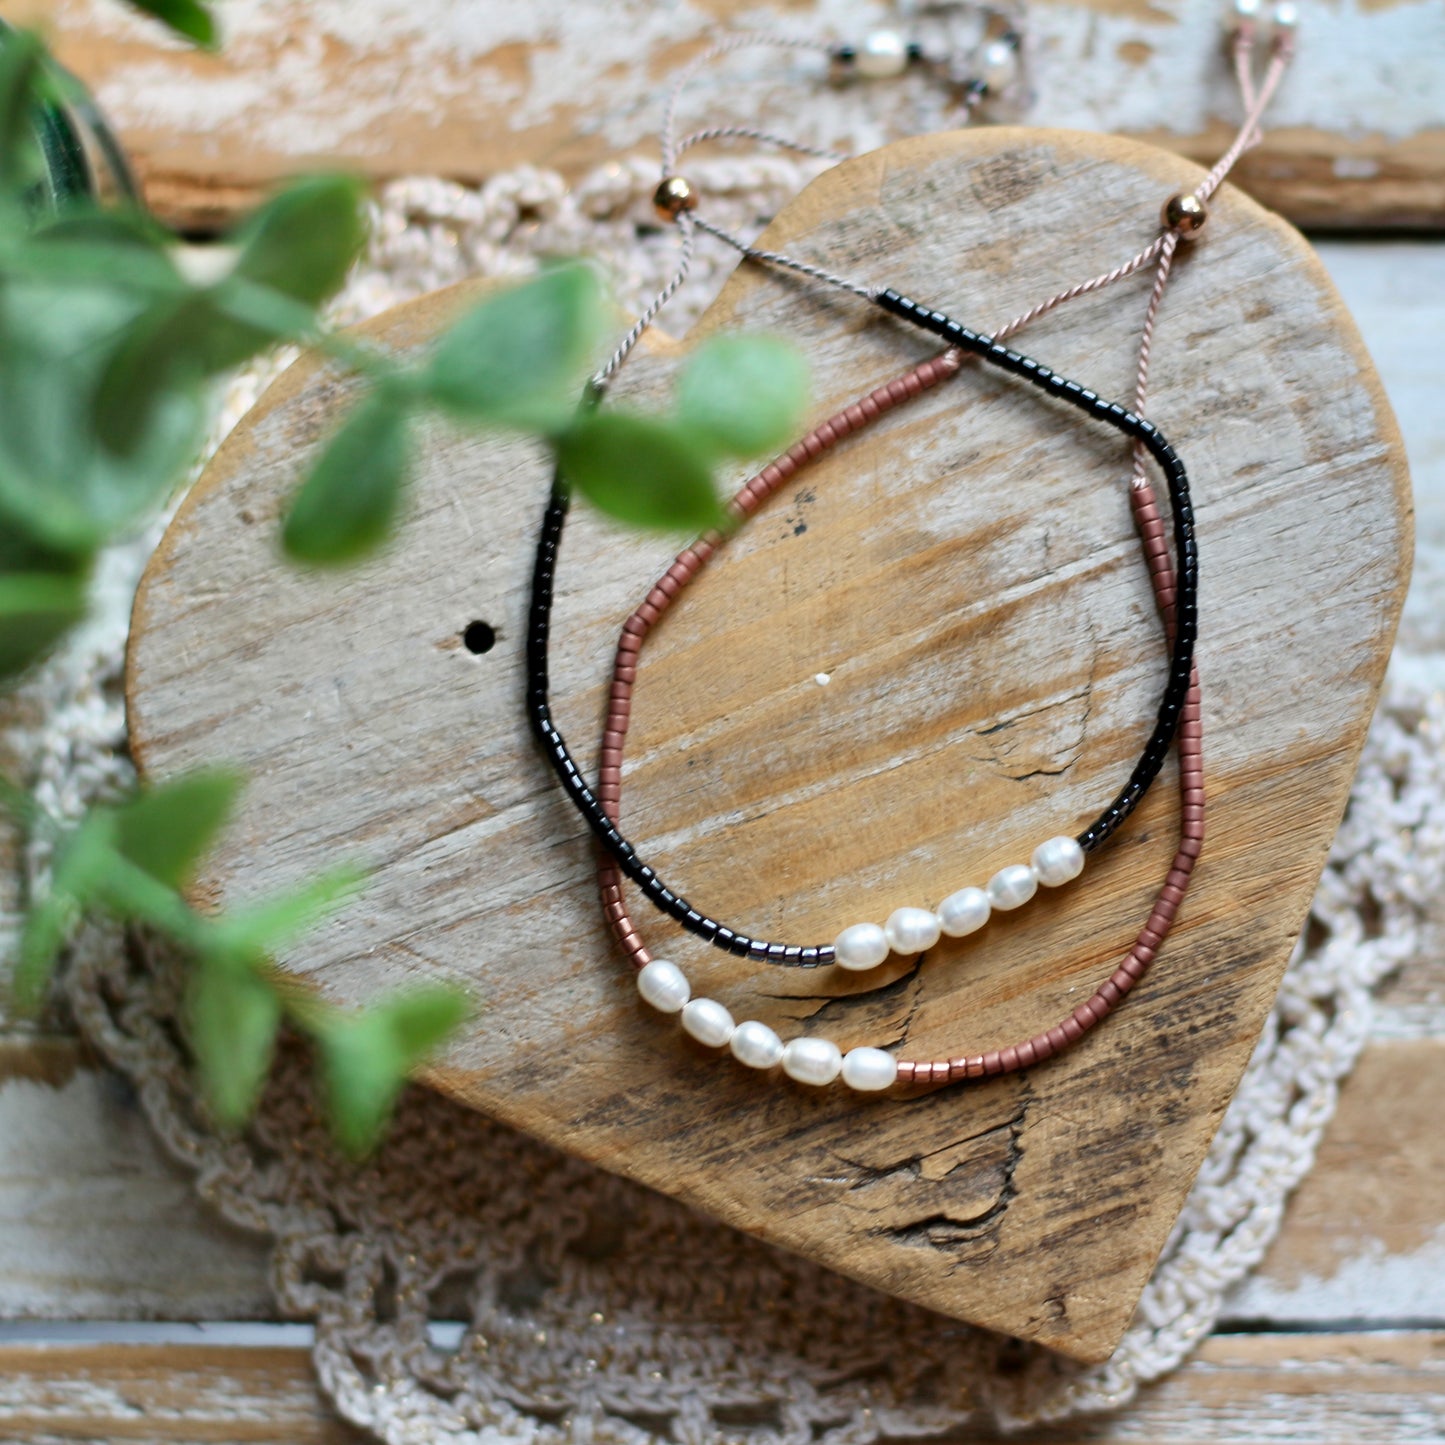 dainty silk cord adjustable beaded bracelet (freshwater pearls)